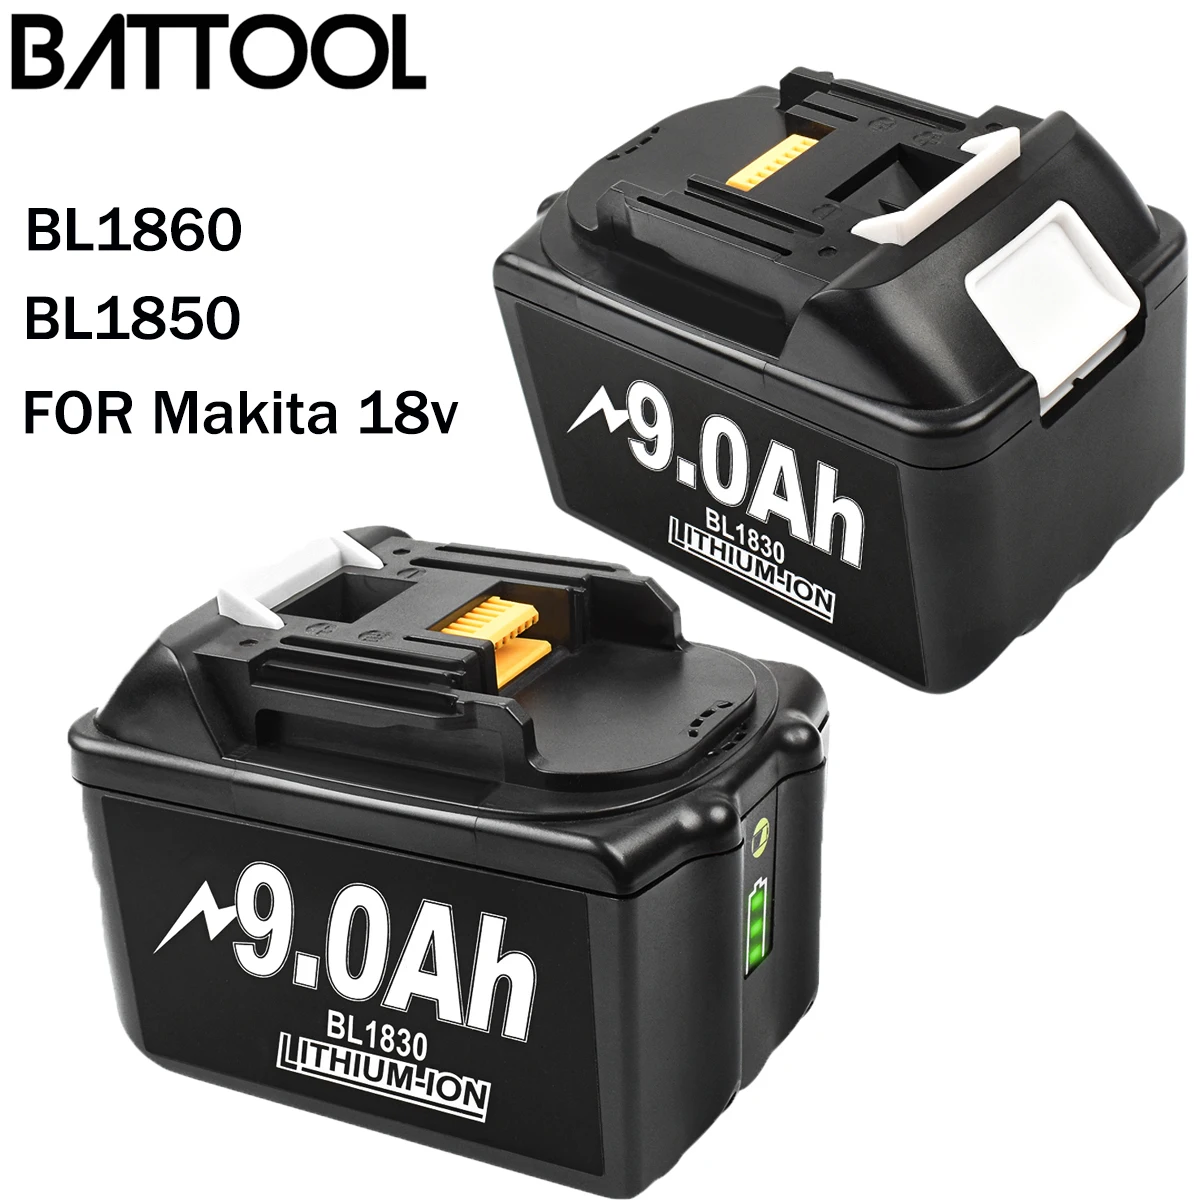 Аккумуляторная литиевая батарея BATTOOL BL1860 18 в 400 Ач для Makita BL1815 BL1830 BL1840 BL1850 LXT